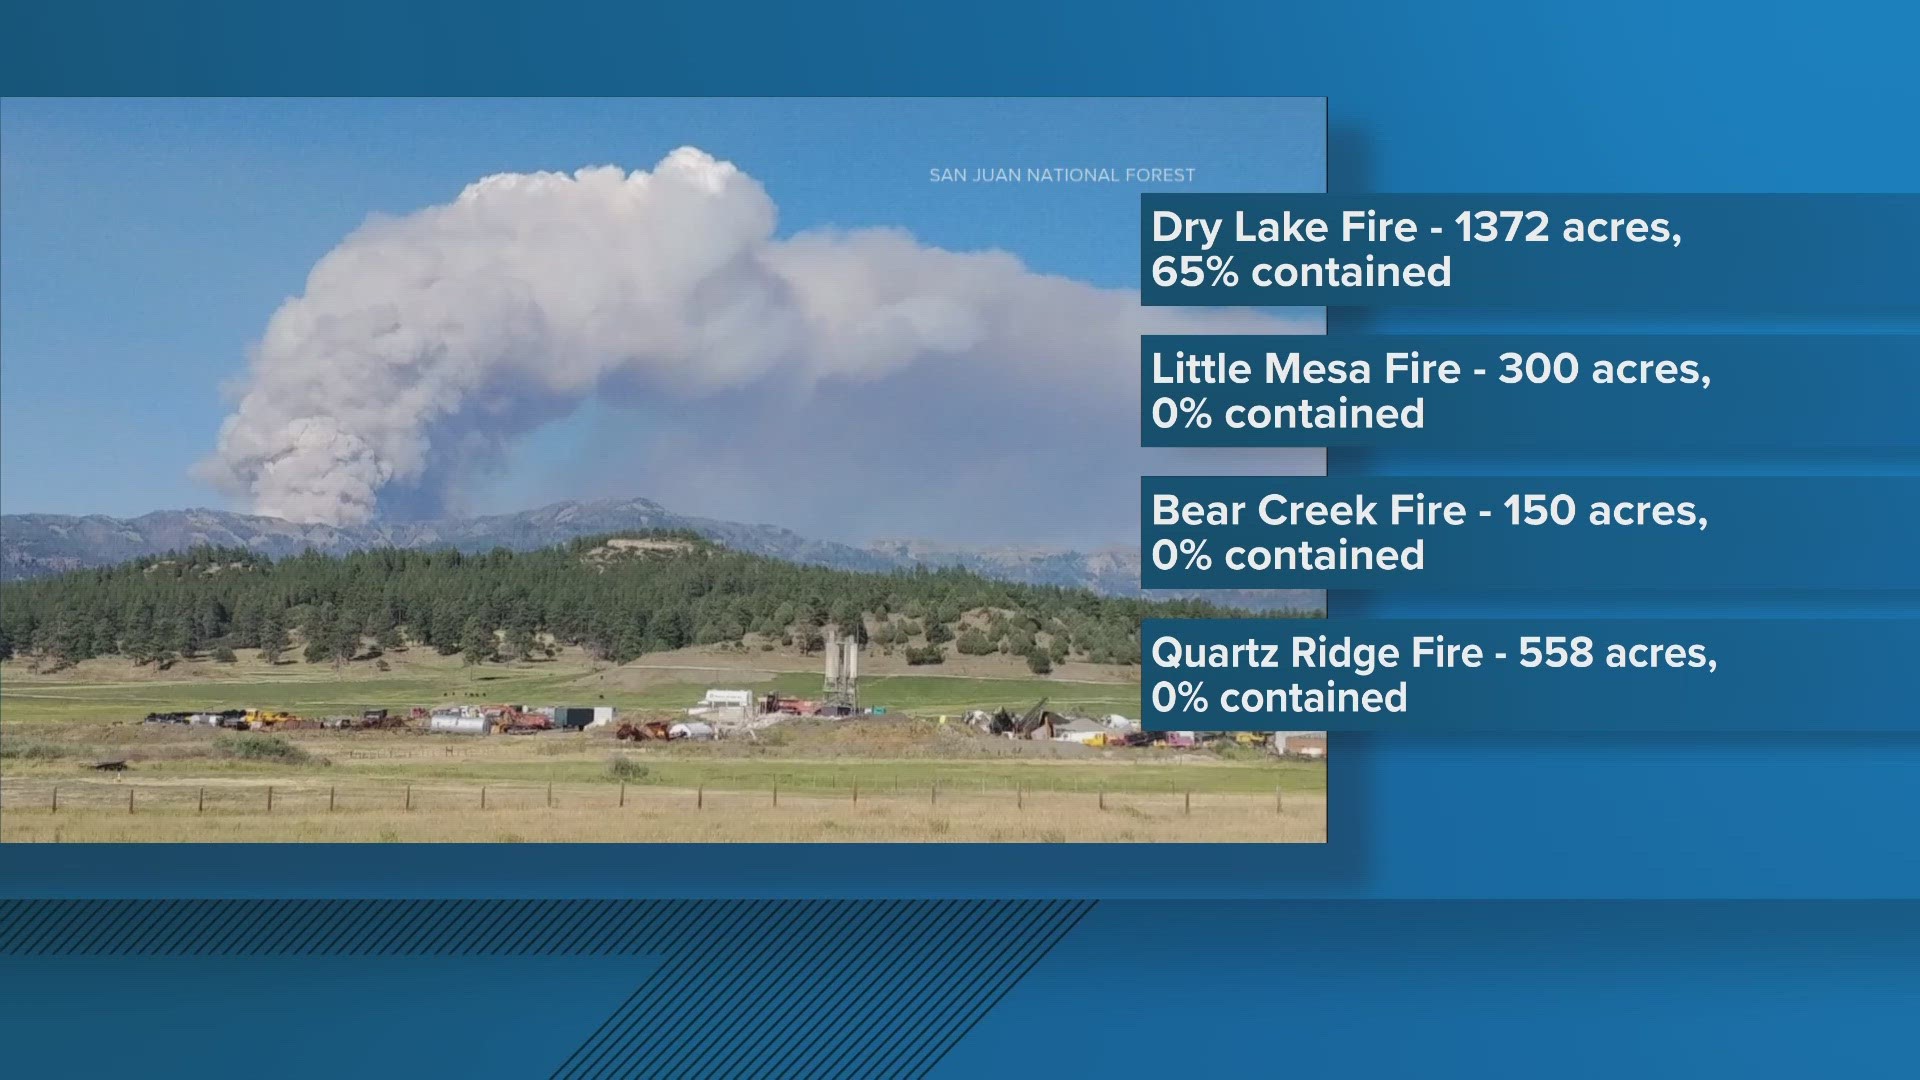 The Quartz Ridge Fire and Bear Creek Fire started last week near Pagosa Springs.